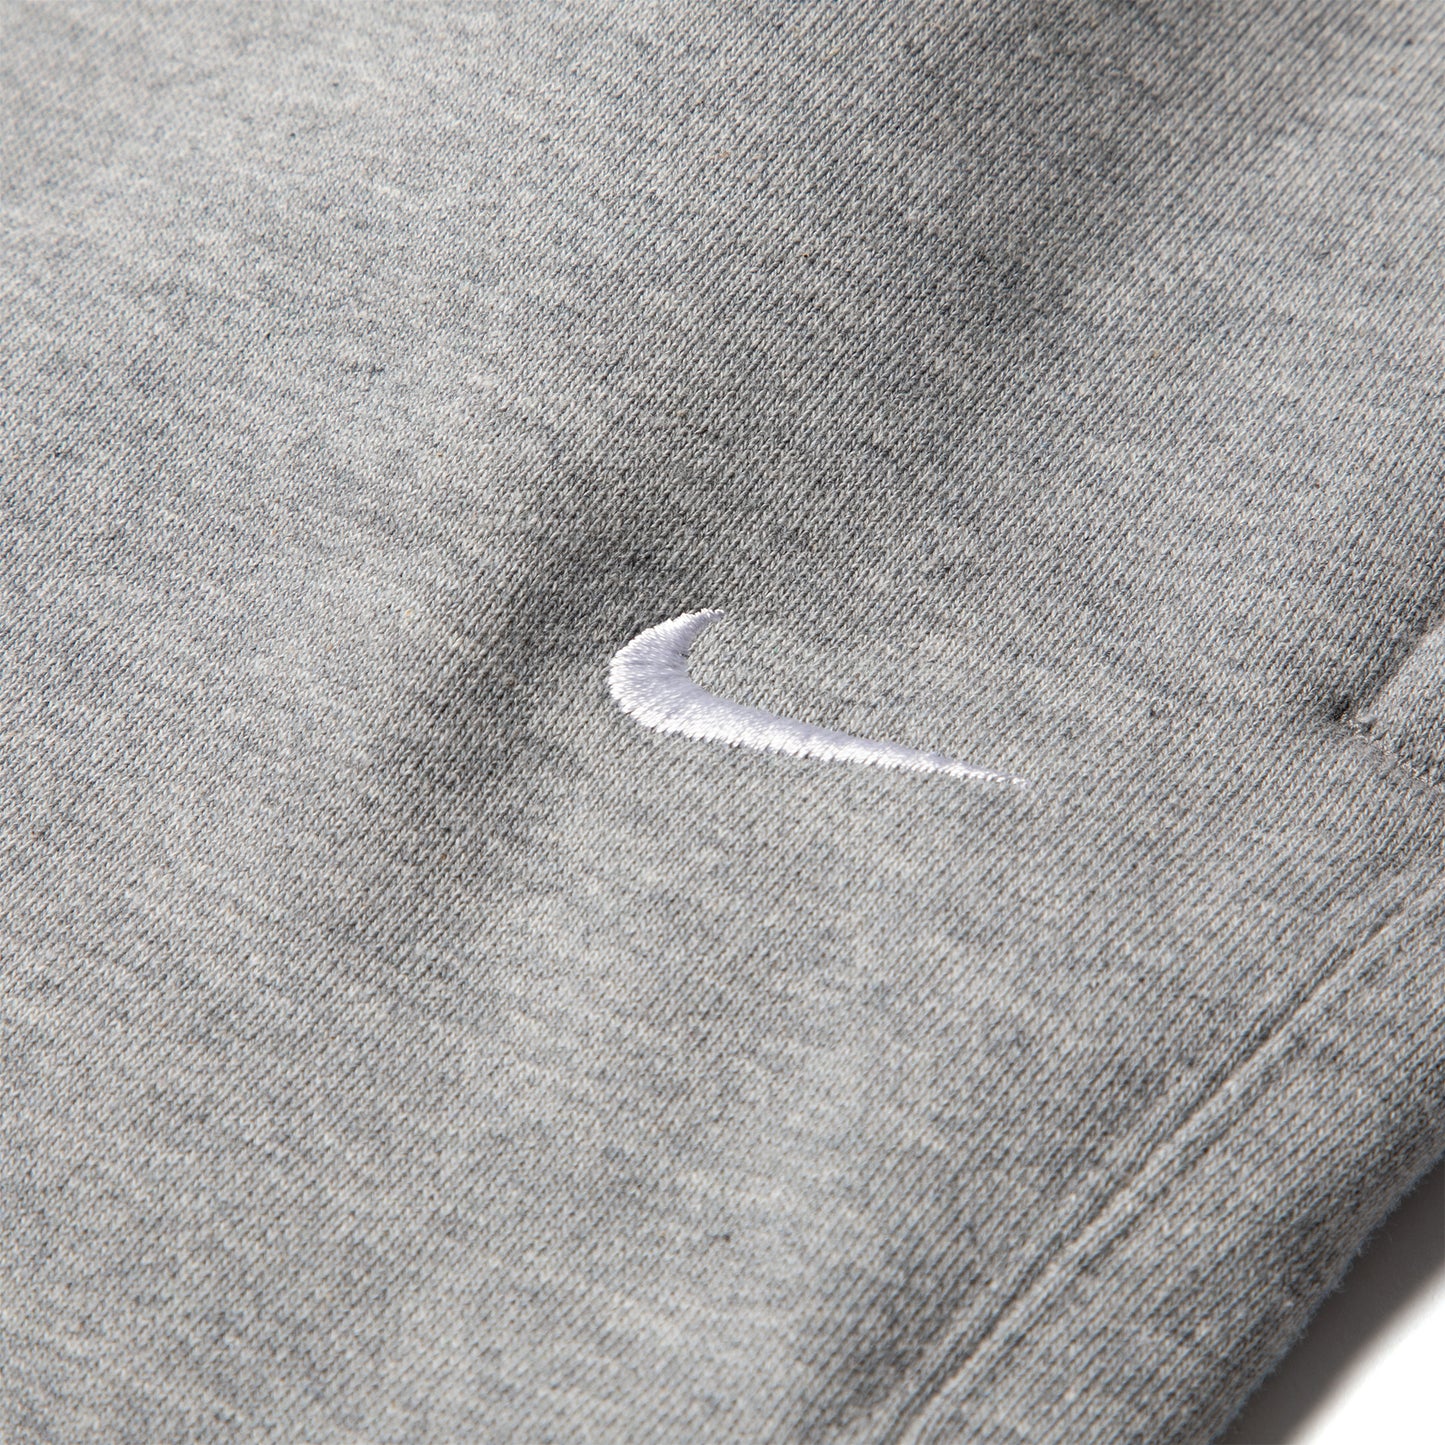 Nike Solo Swoosh Pants (Dark Grey Heather/White)